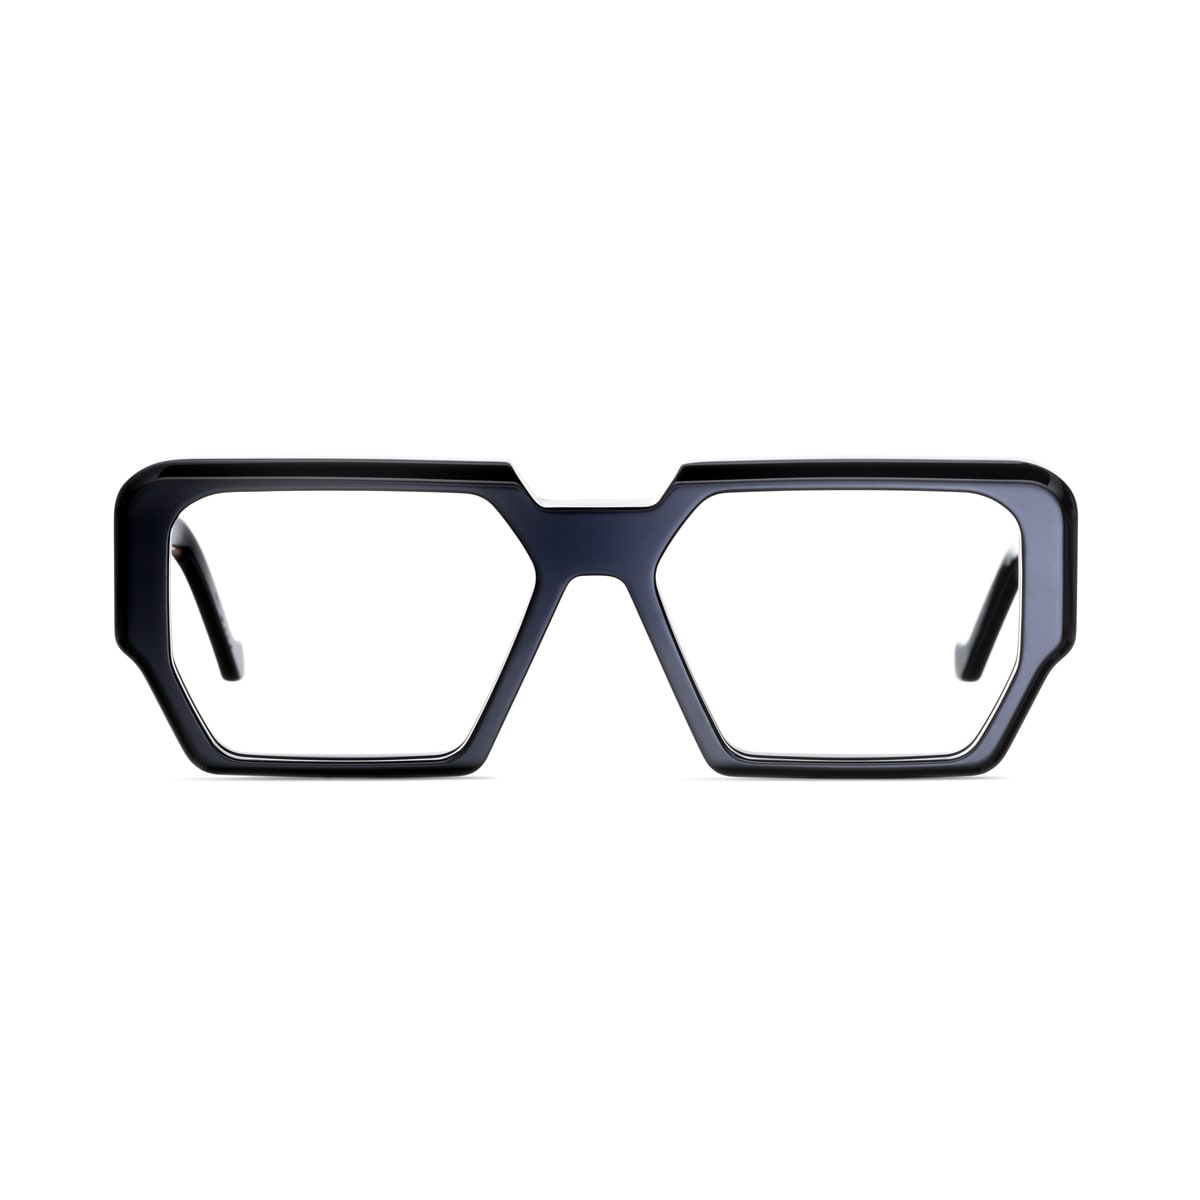 Wl0064 White Label Black Glasses